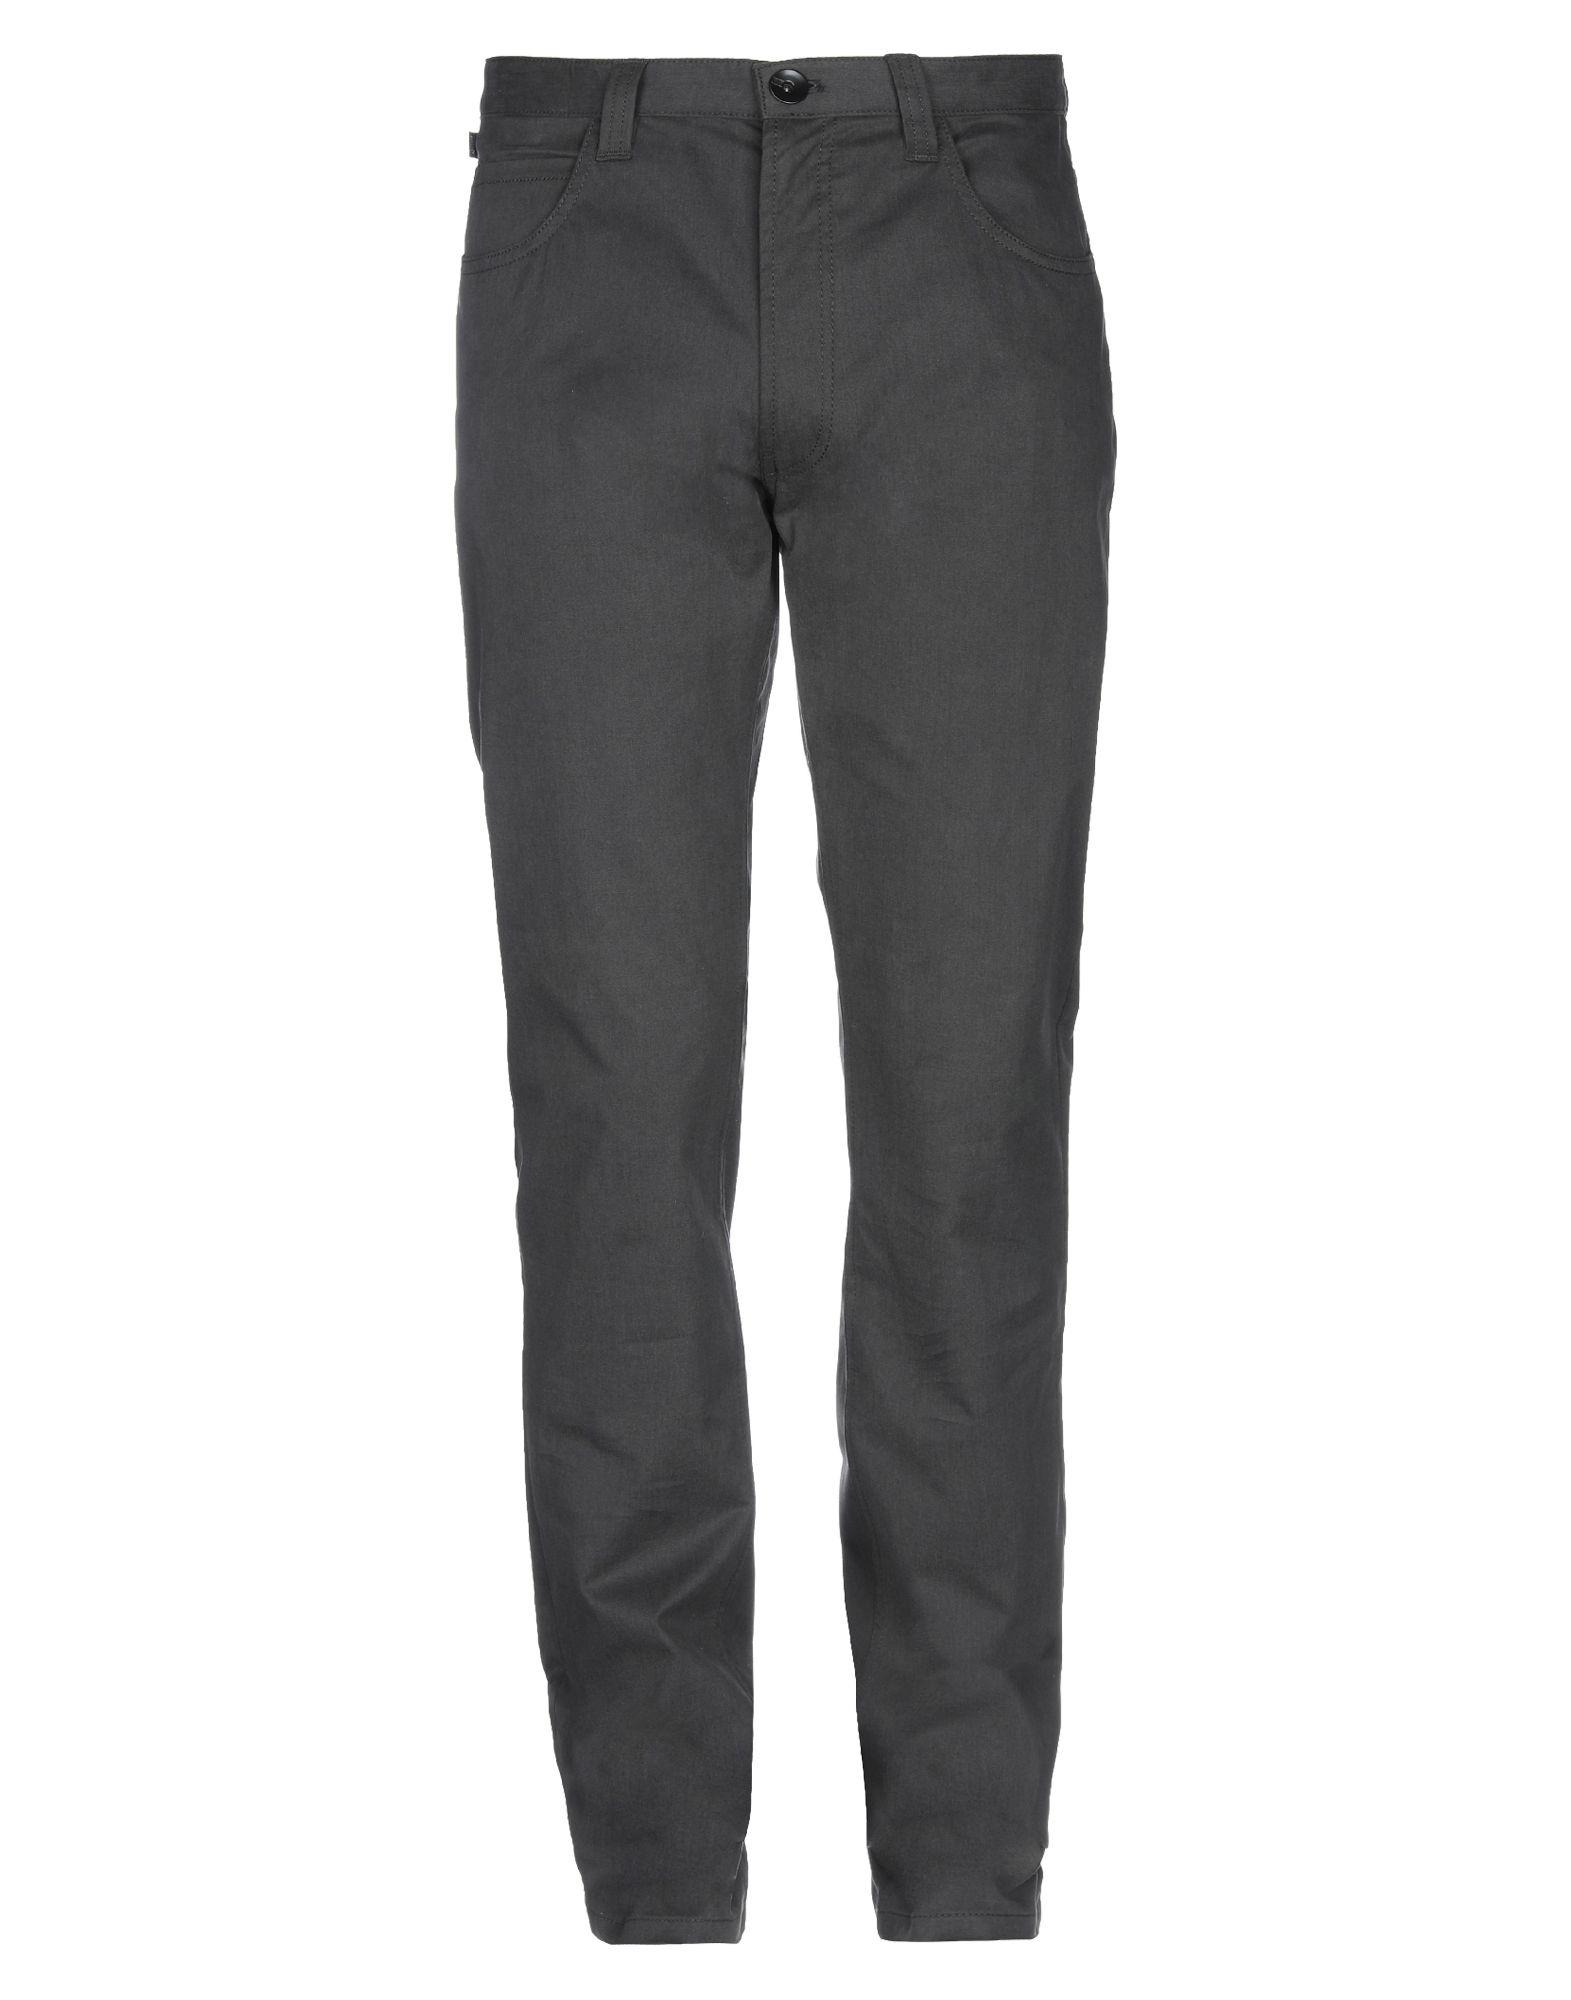 Armani Cotton Casual Trouser in Lead (Gray) for Men - Lyst